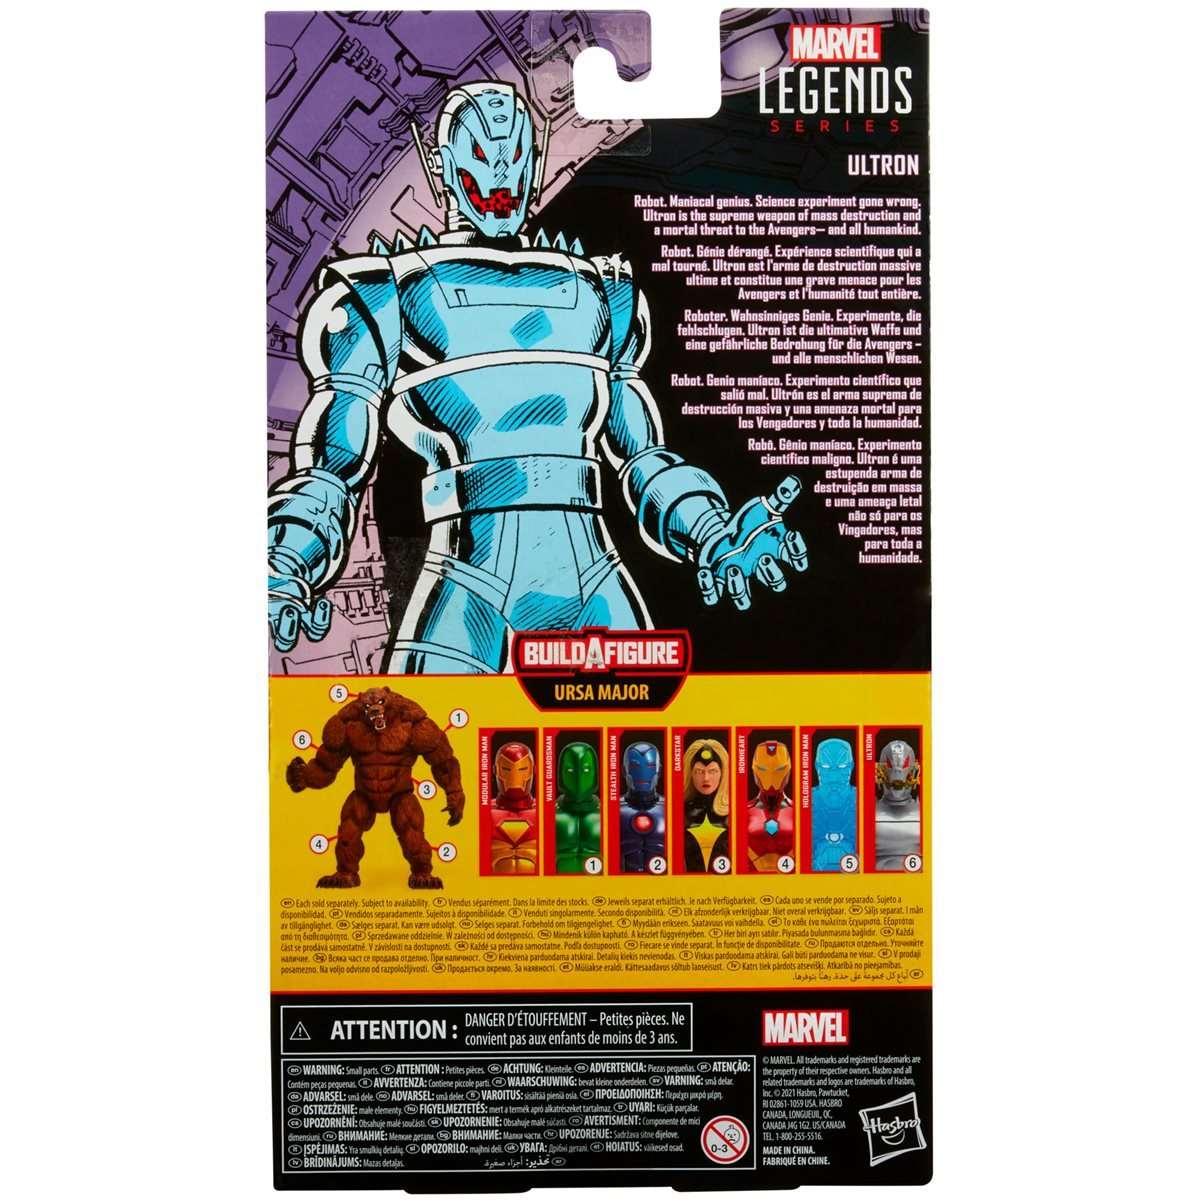 Marvel Legends Ursa Major build a figure wave Comic Ultron 6-inch figure packaging back